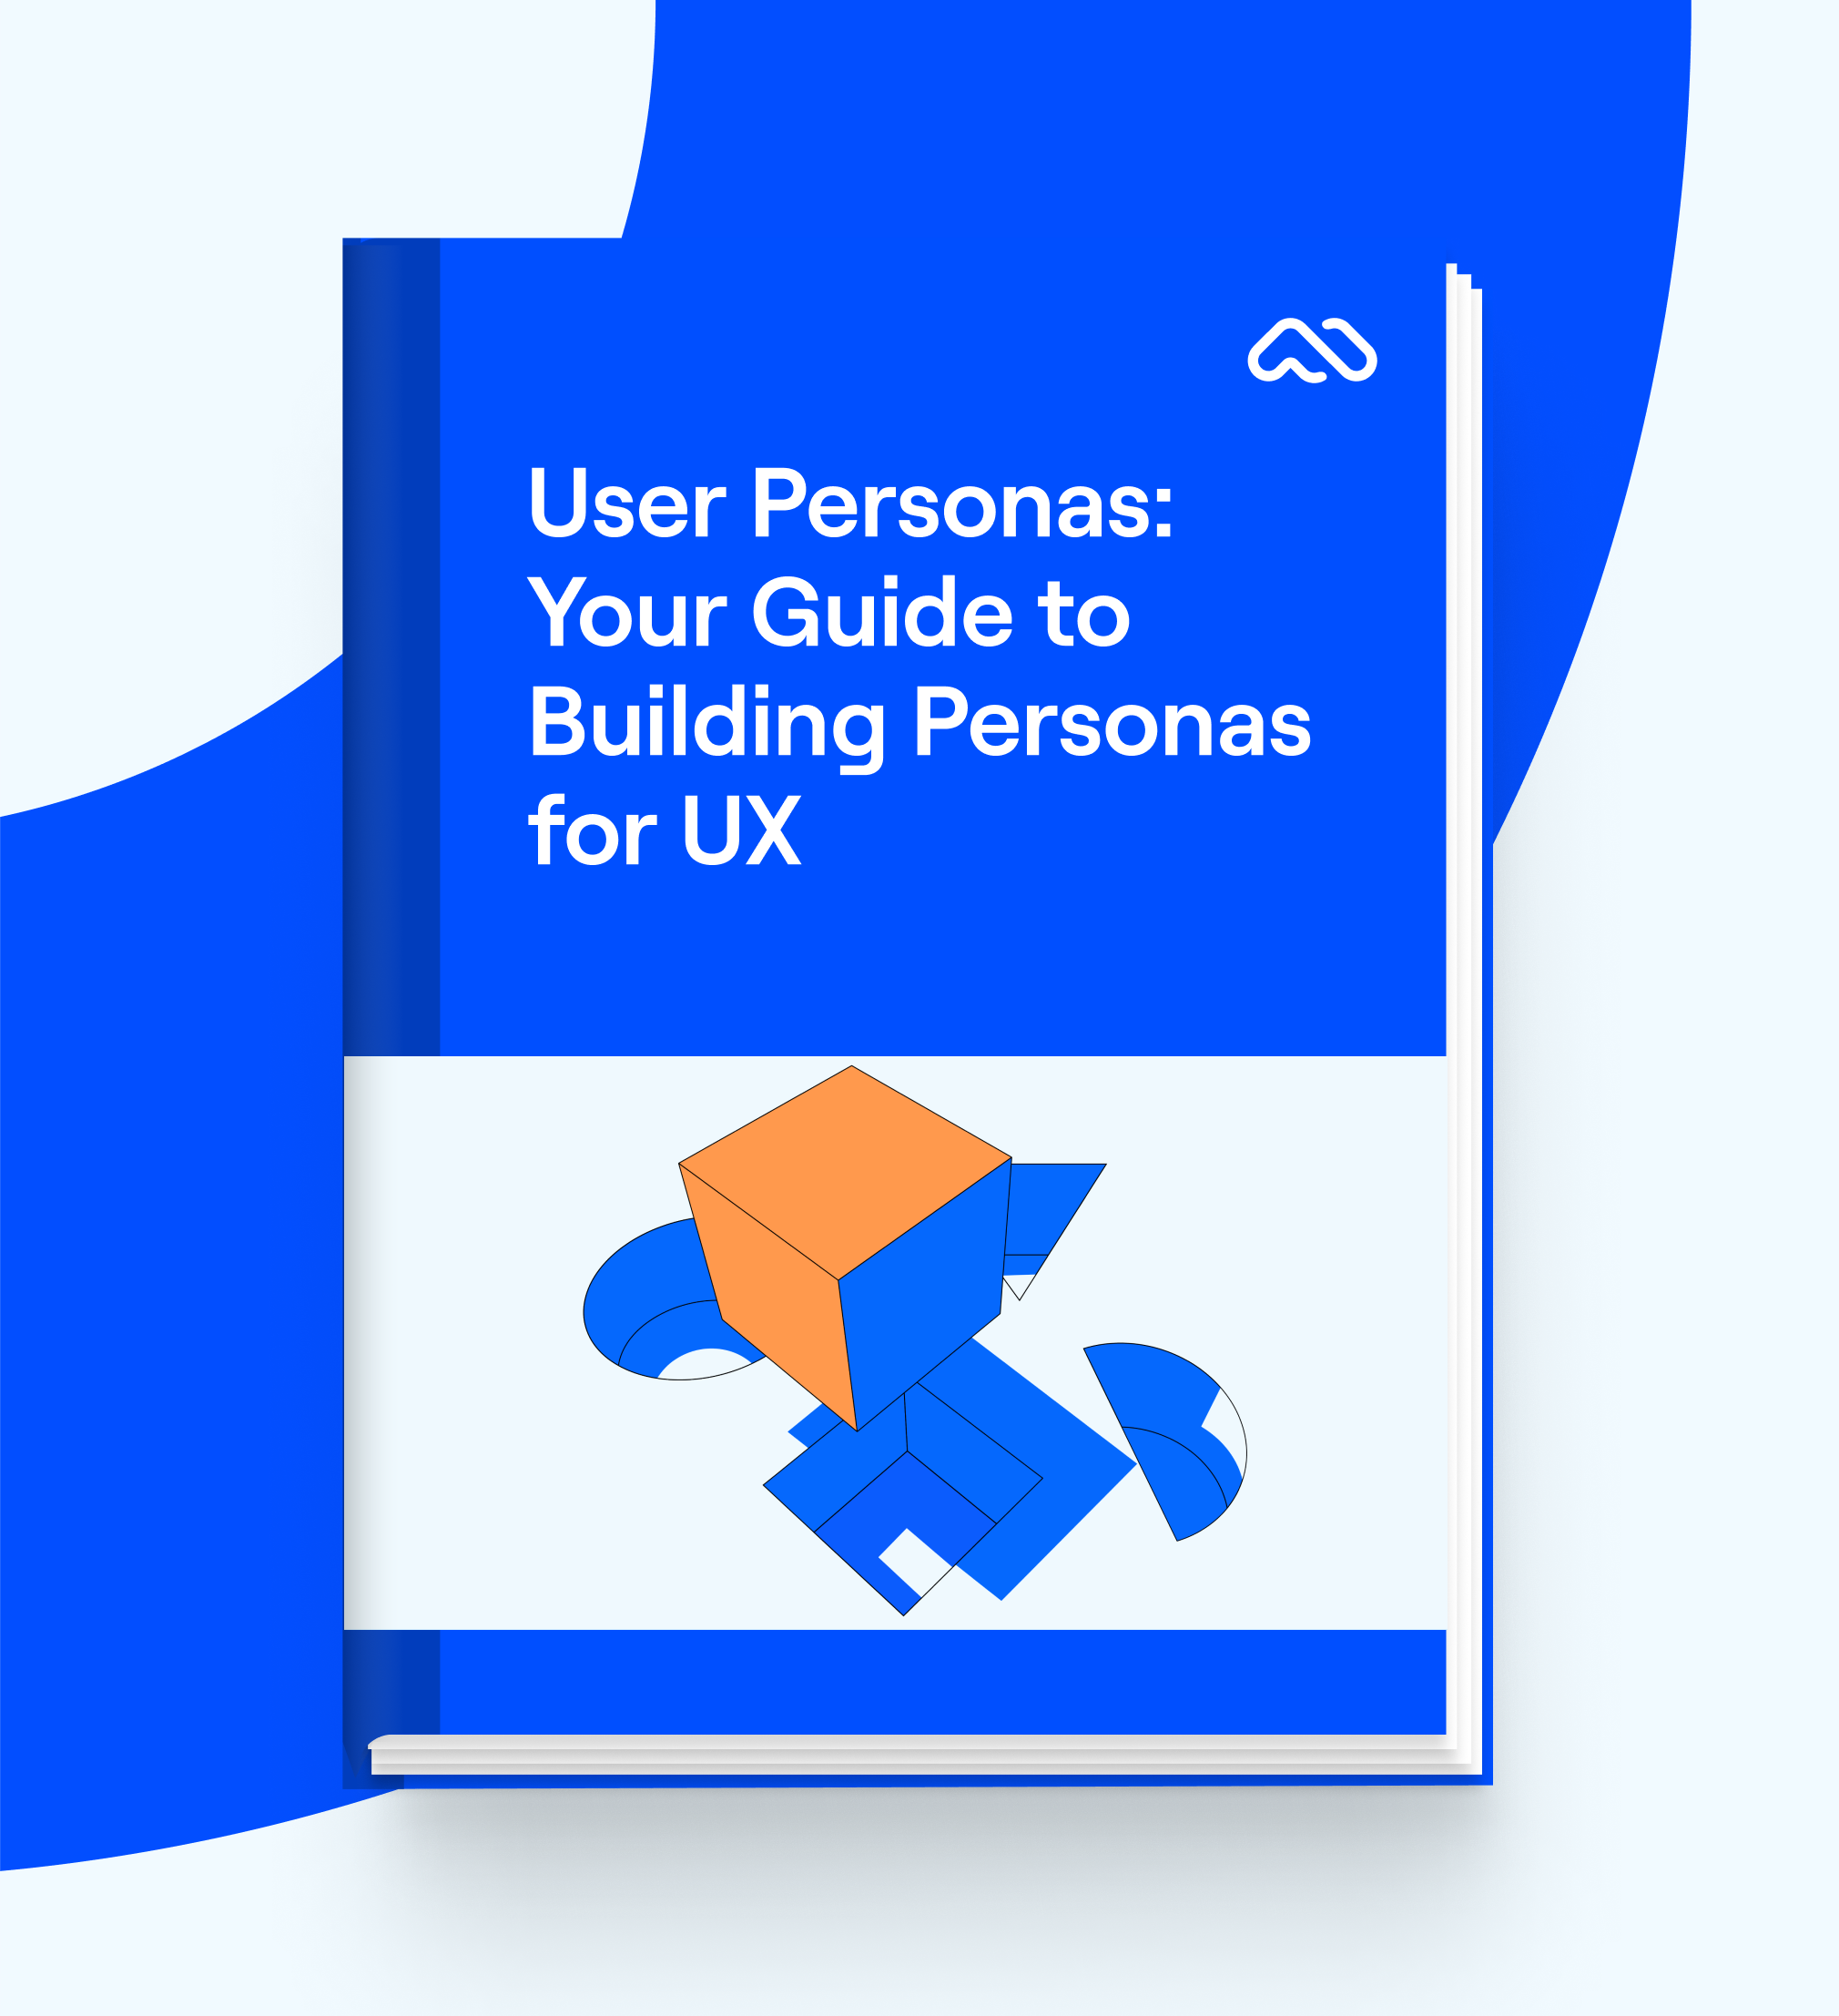 User personas guide cover